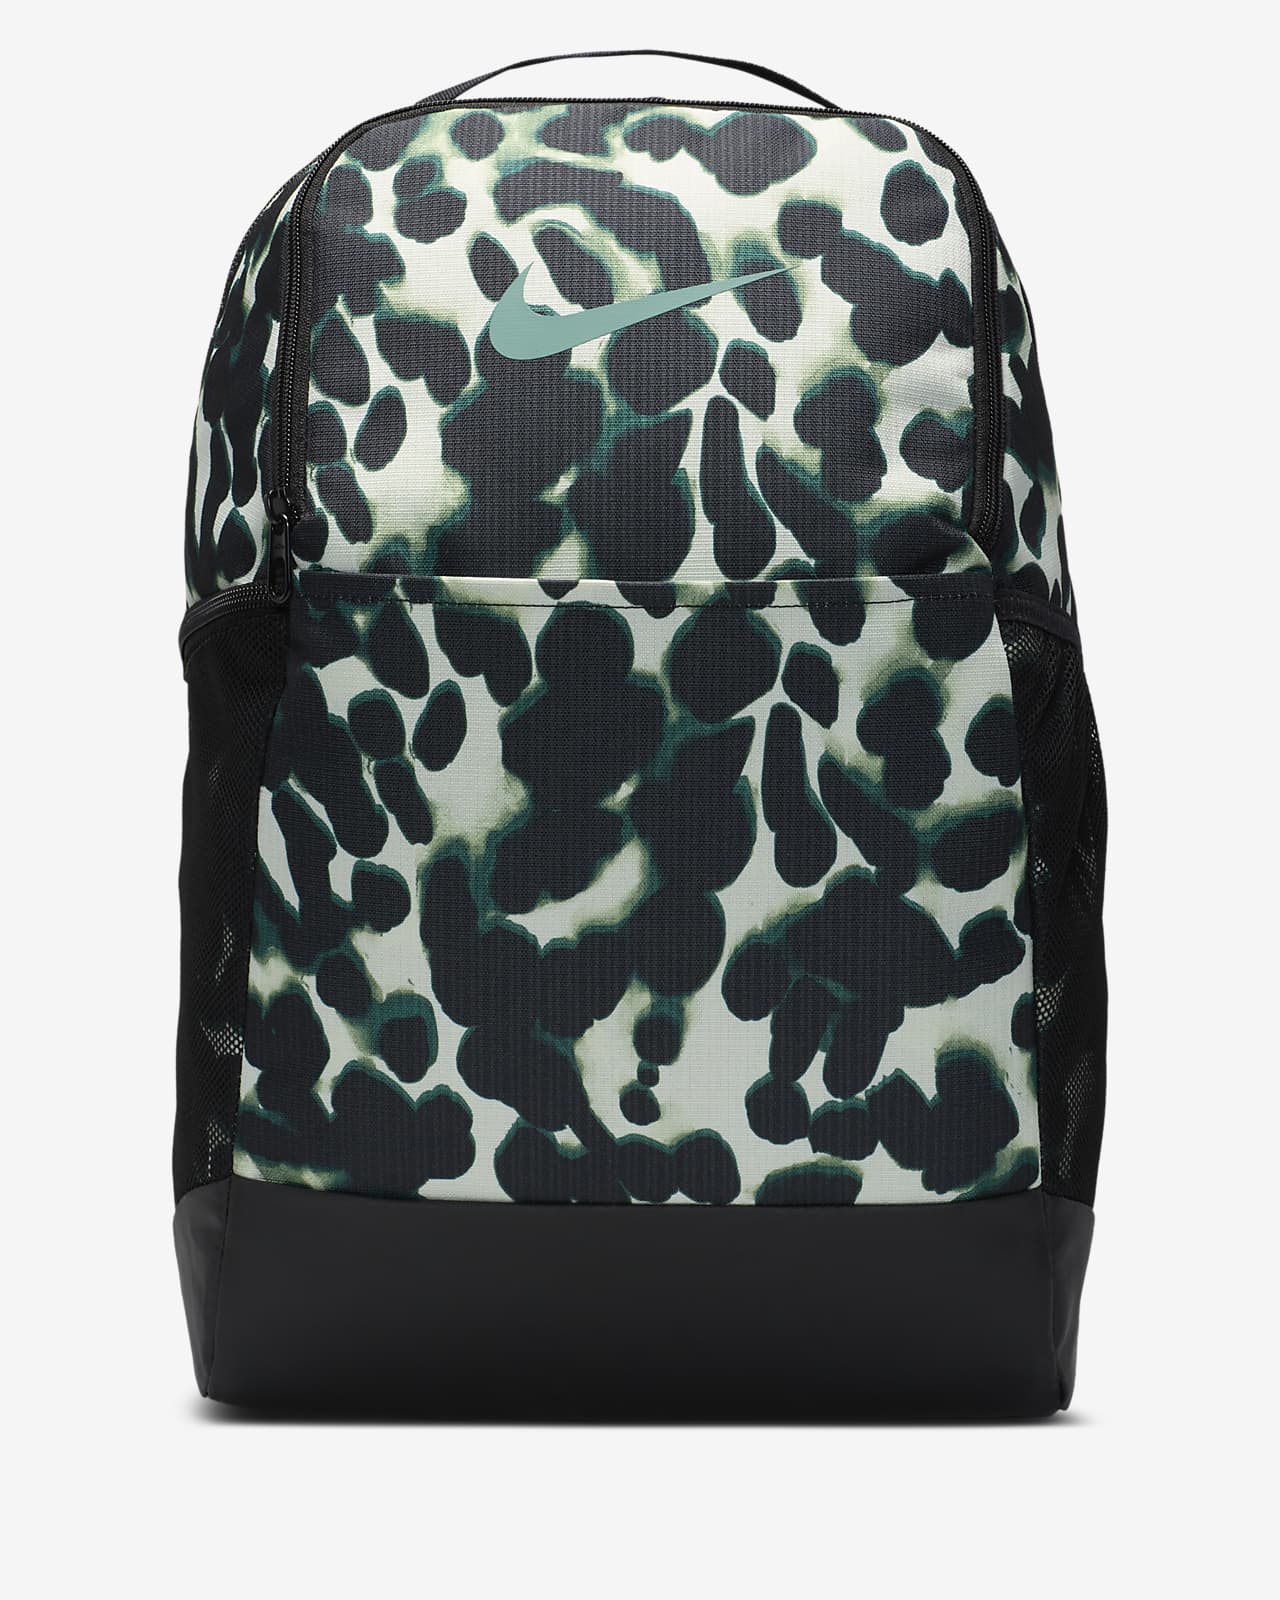 Nike Brasilia Embroidered I-Vandals Backpack